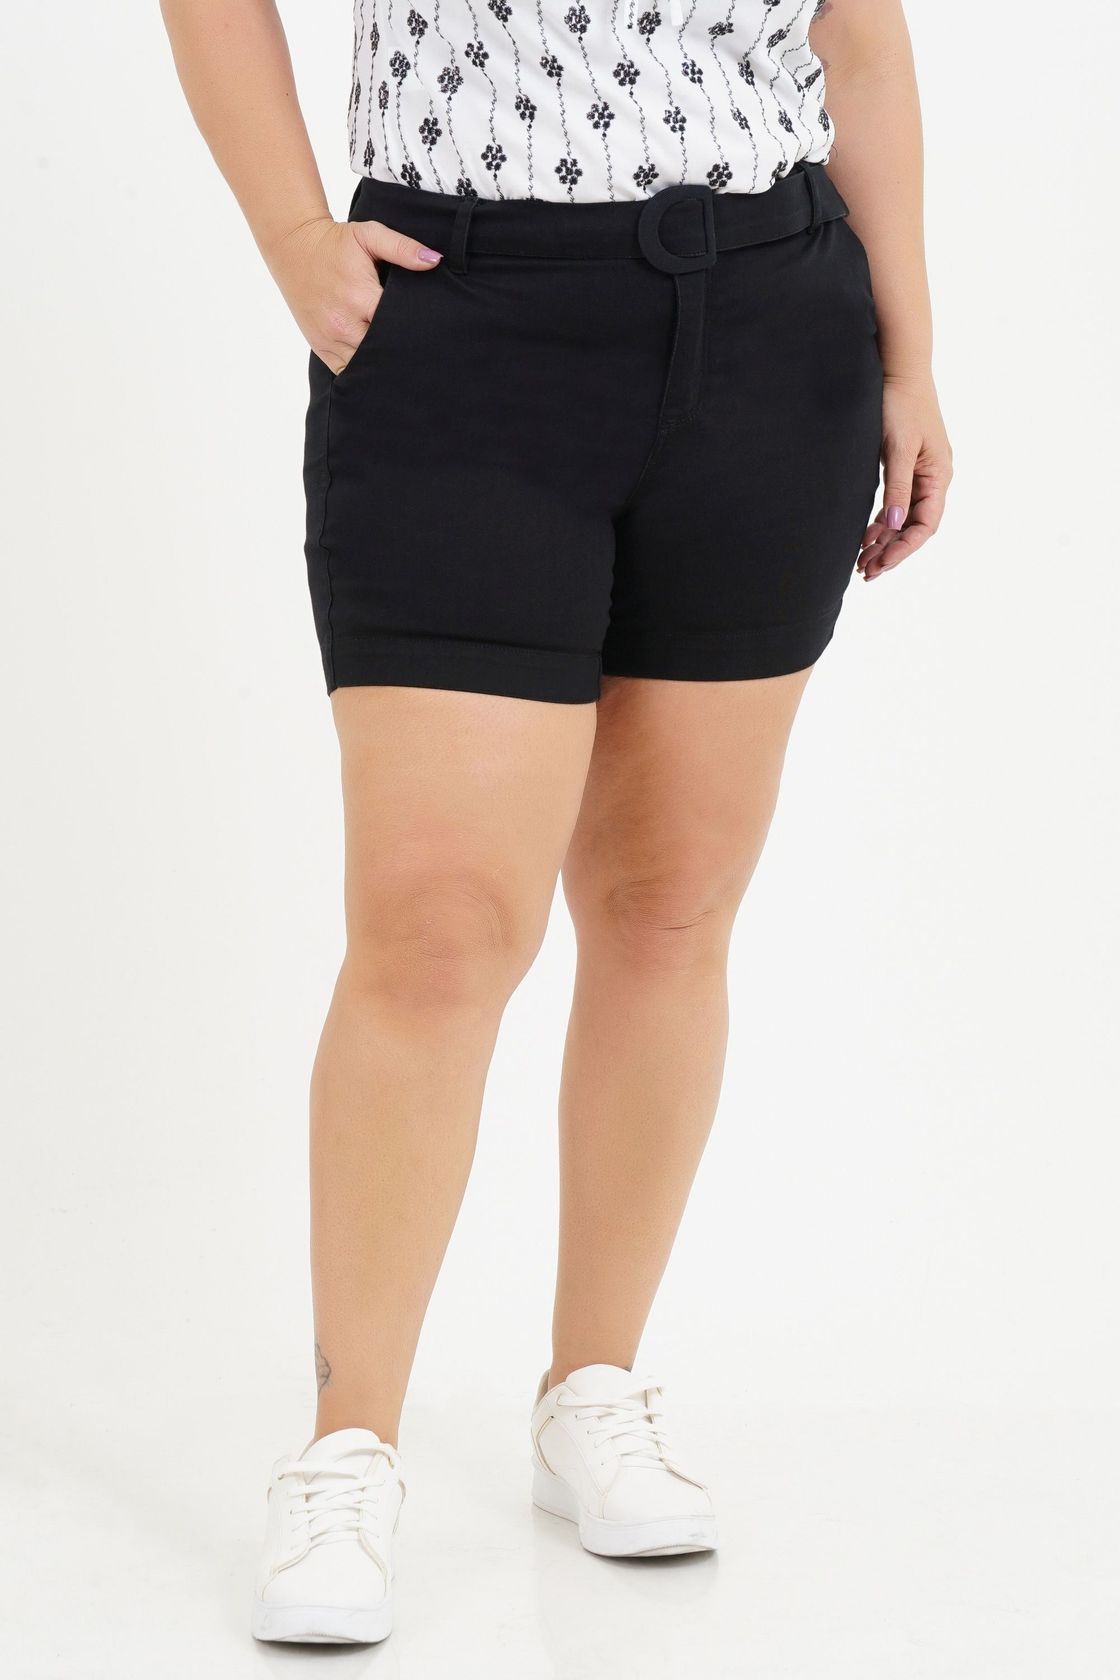 Shorts Plus Size Sophia Laise - Program Moda